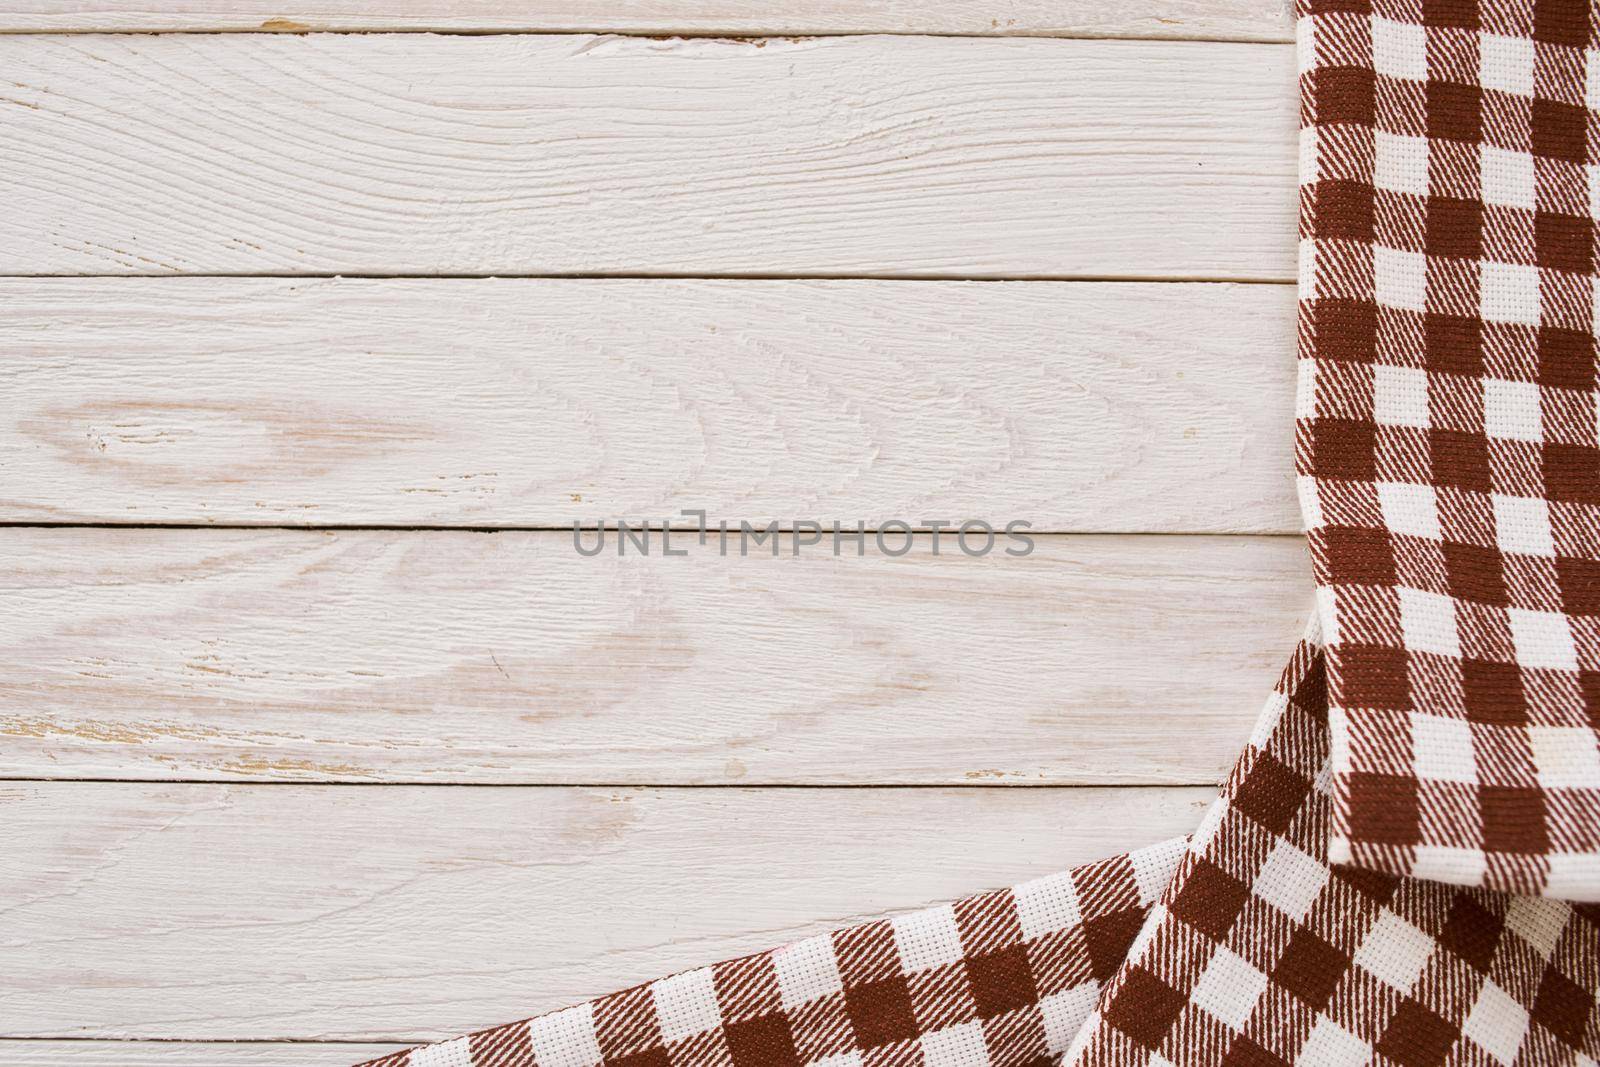 plaid tablecloth wooden texture kitchen decoration design. High quality photo